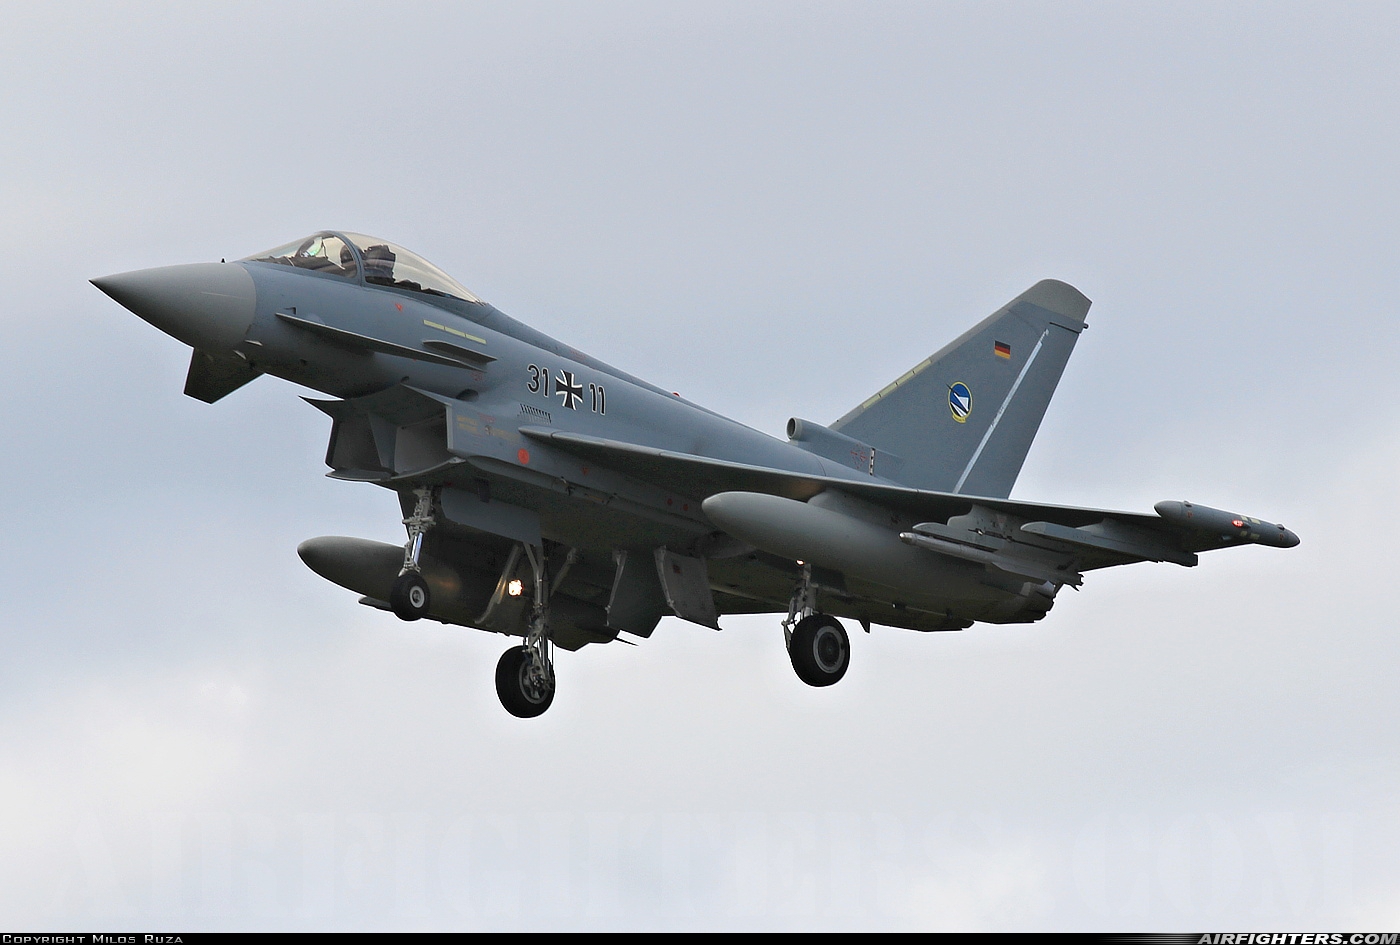 Germany - Air Force Eurofighter EF-2000 Typhoon S 31+11 at Schleswig (- Jagel) (WBG / ETNS), Germany